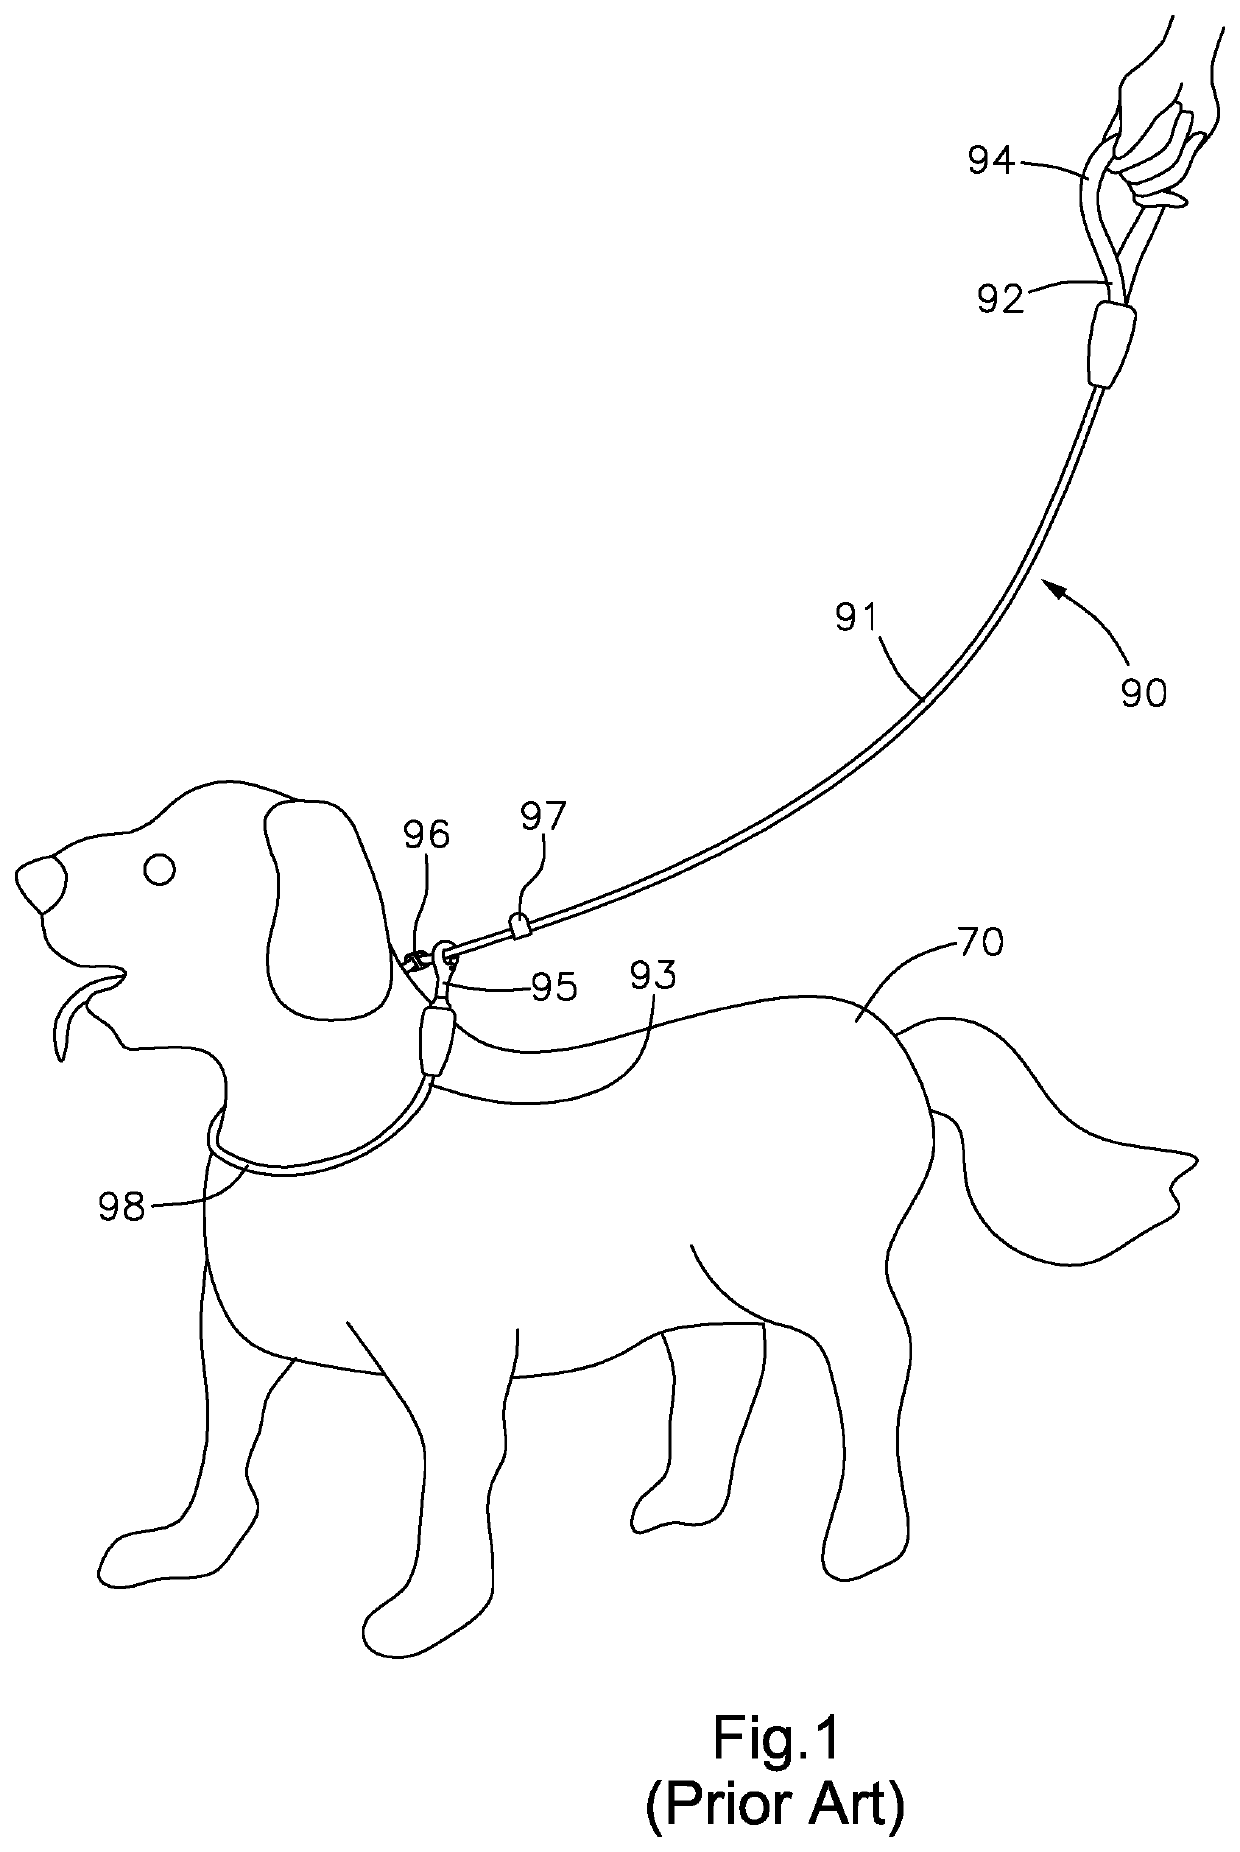 P-shaped pet leash